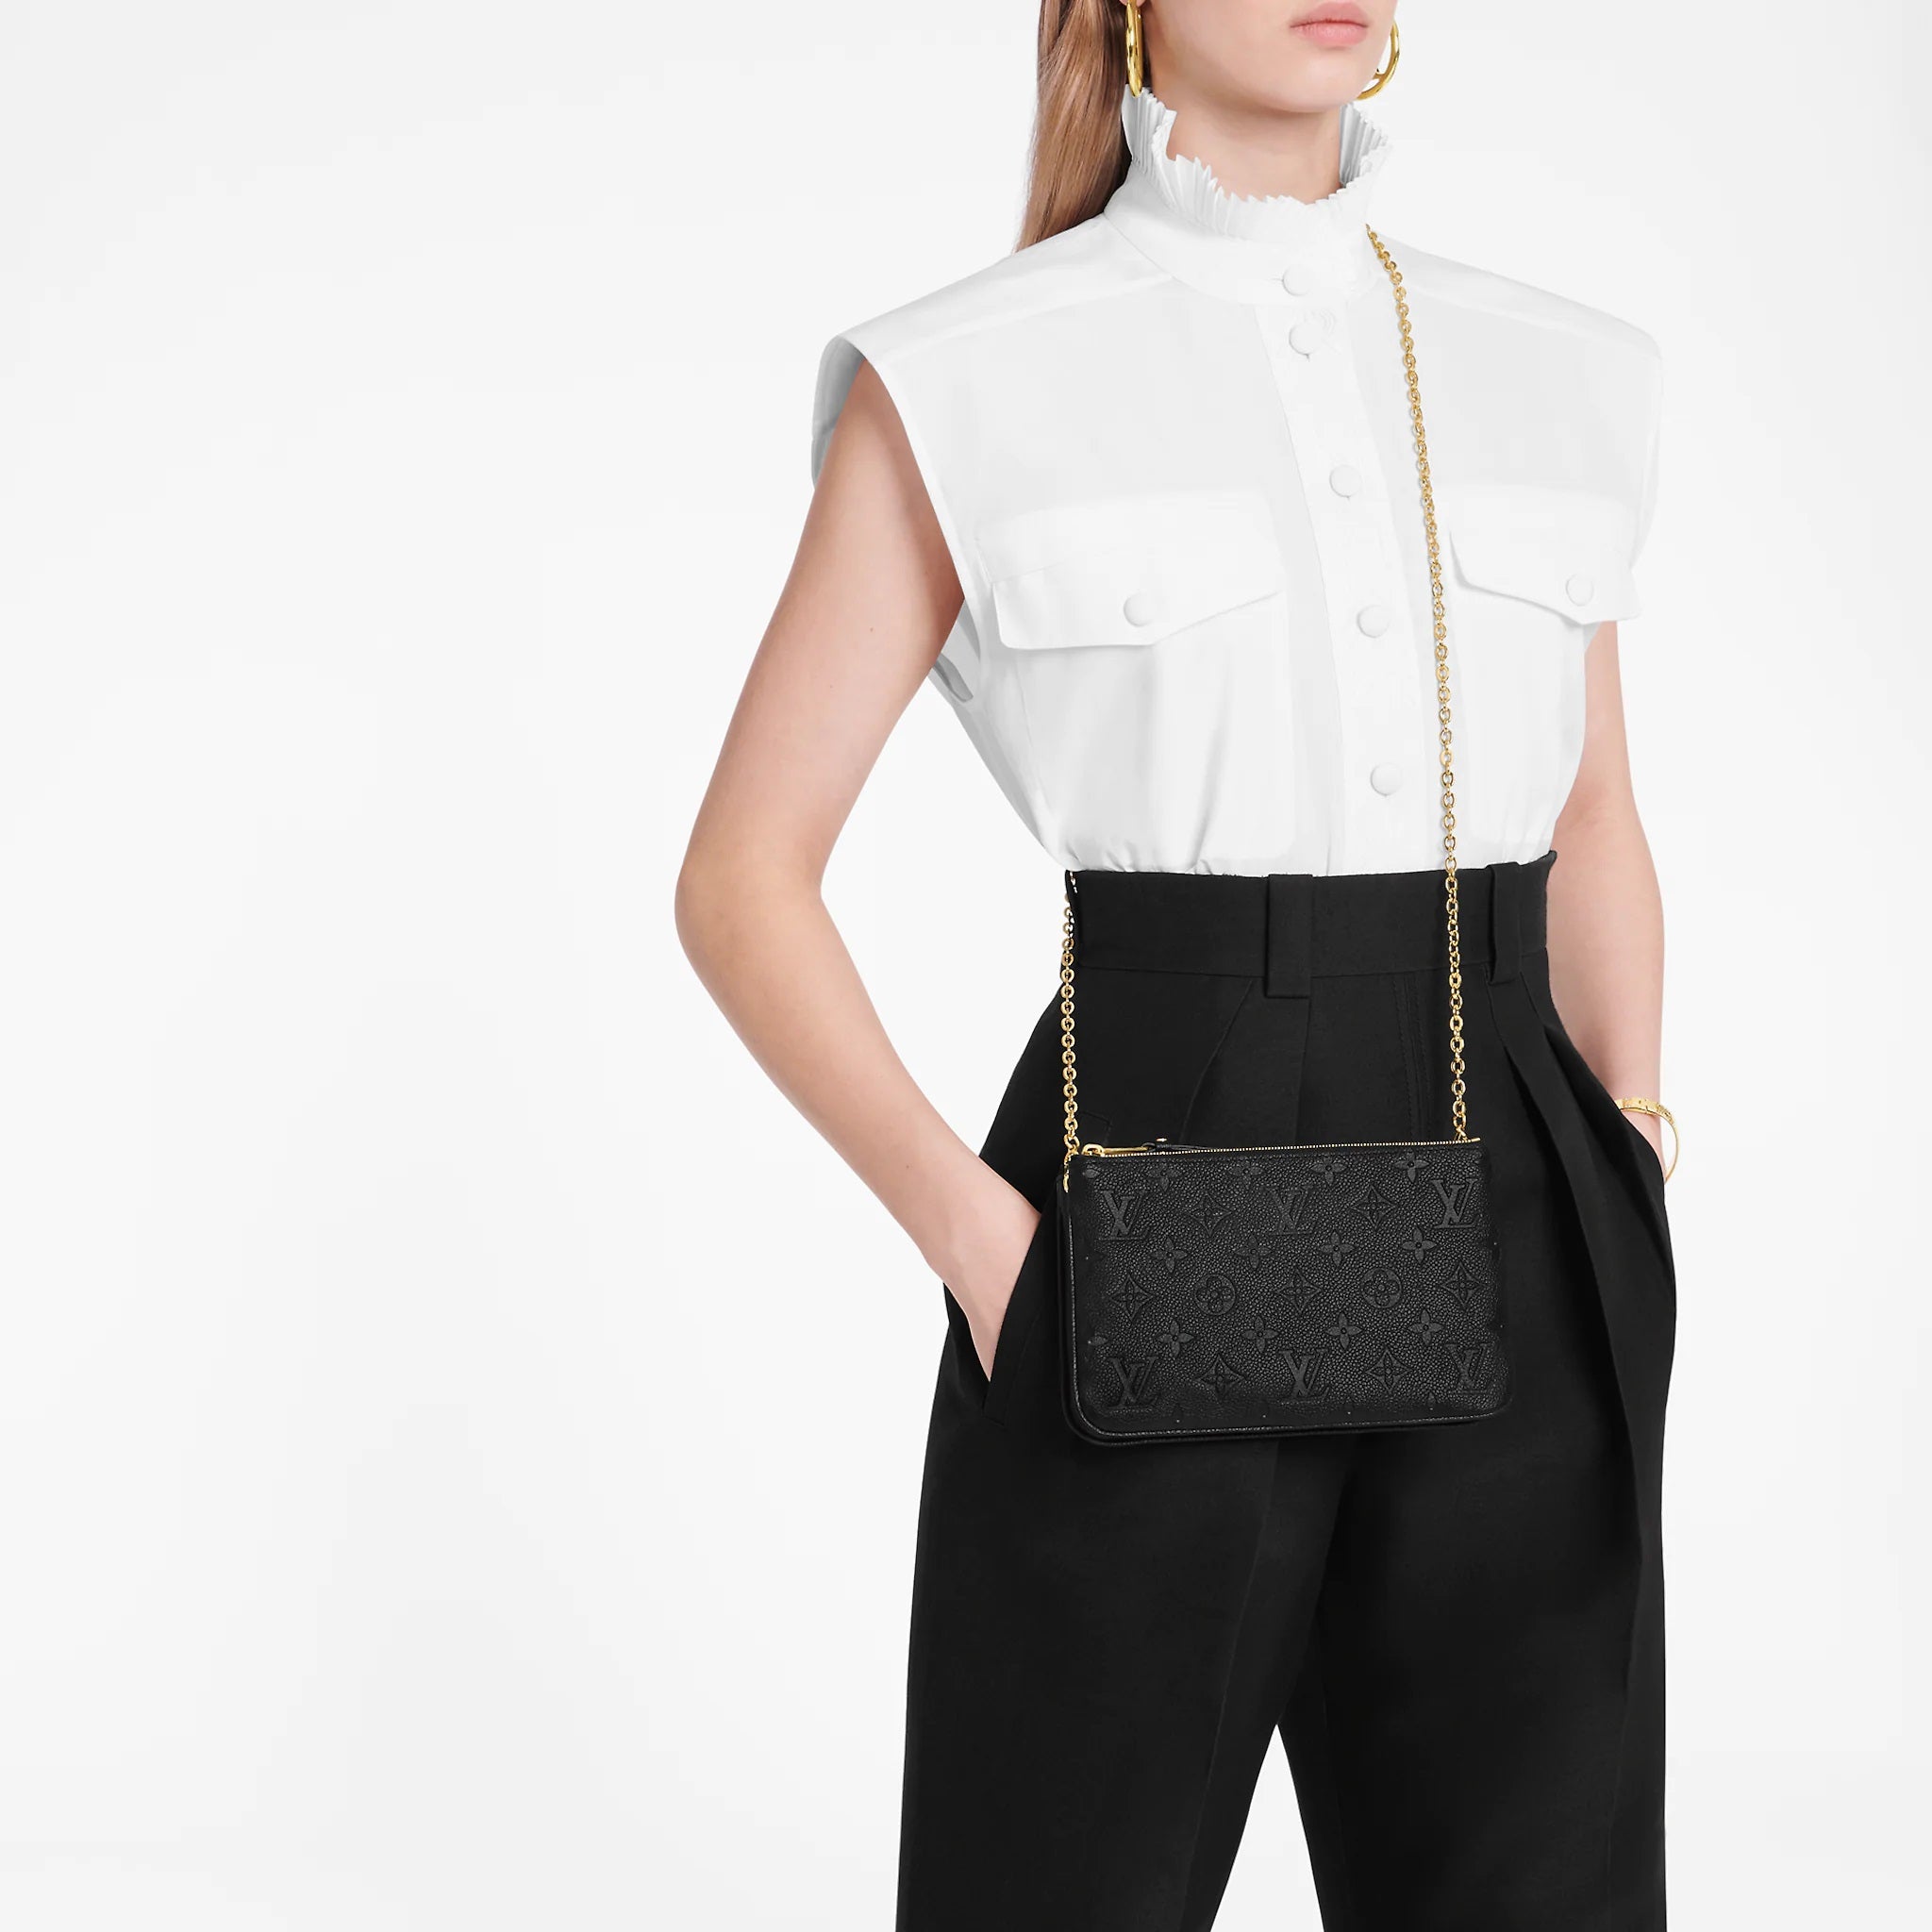 Which Louis Vuitton Handbag Is the Cheapest? Louis Vuitton Purses Under $1,500 Louis Vuitton Double Zip Pochette (Empreinte) purse